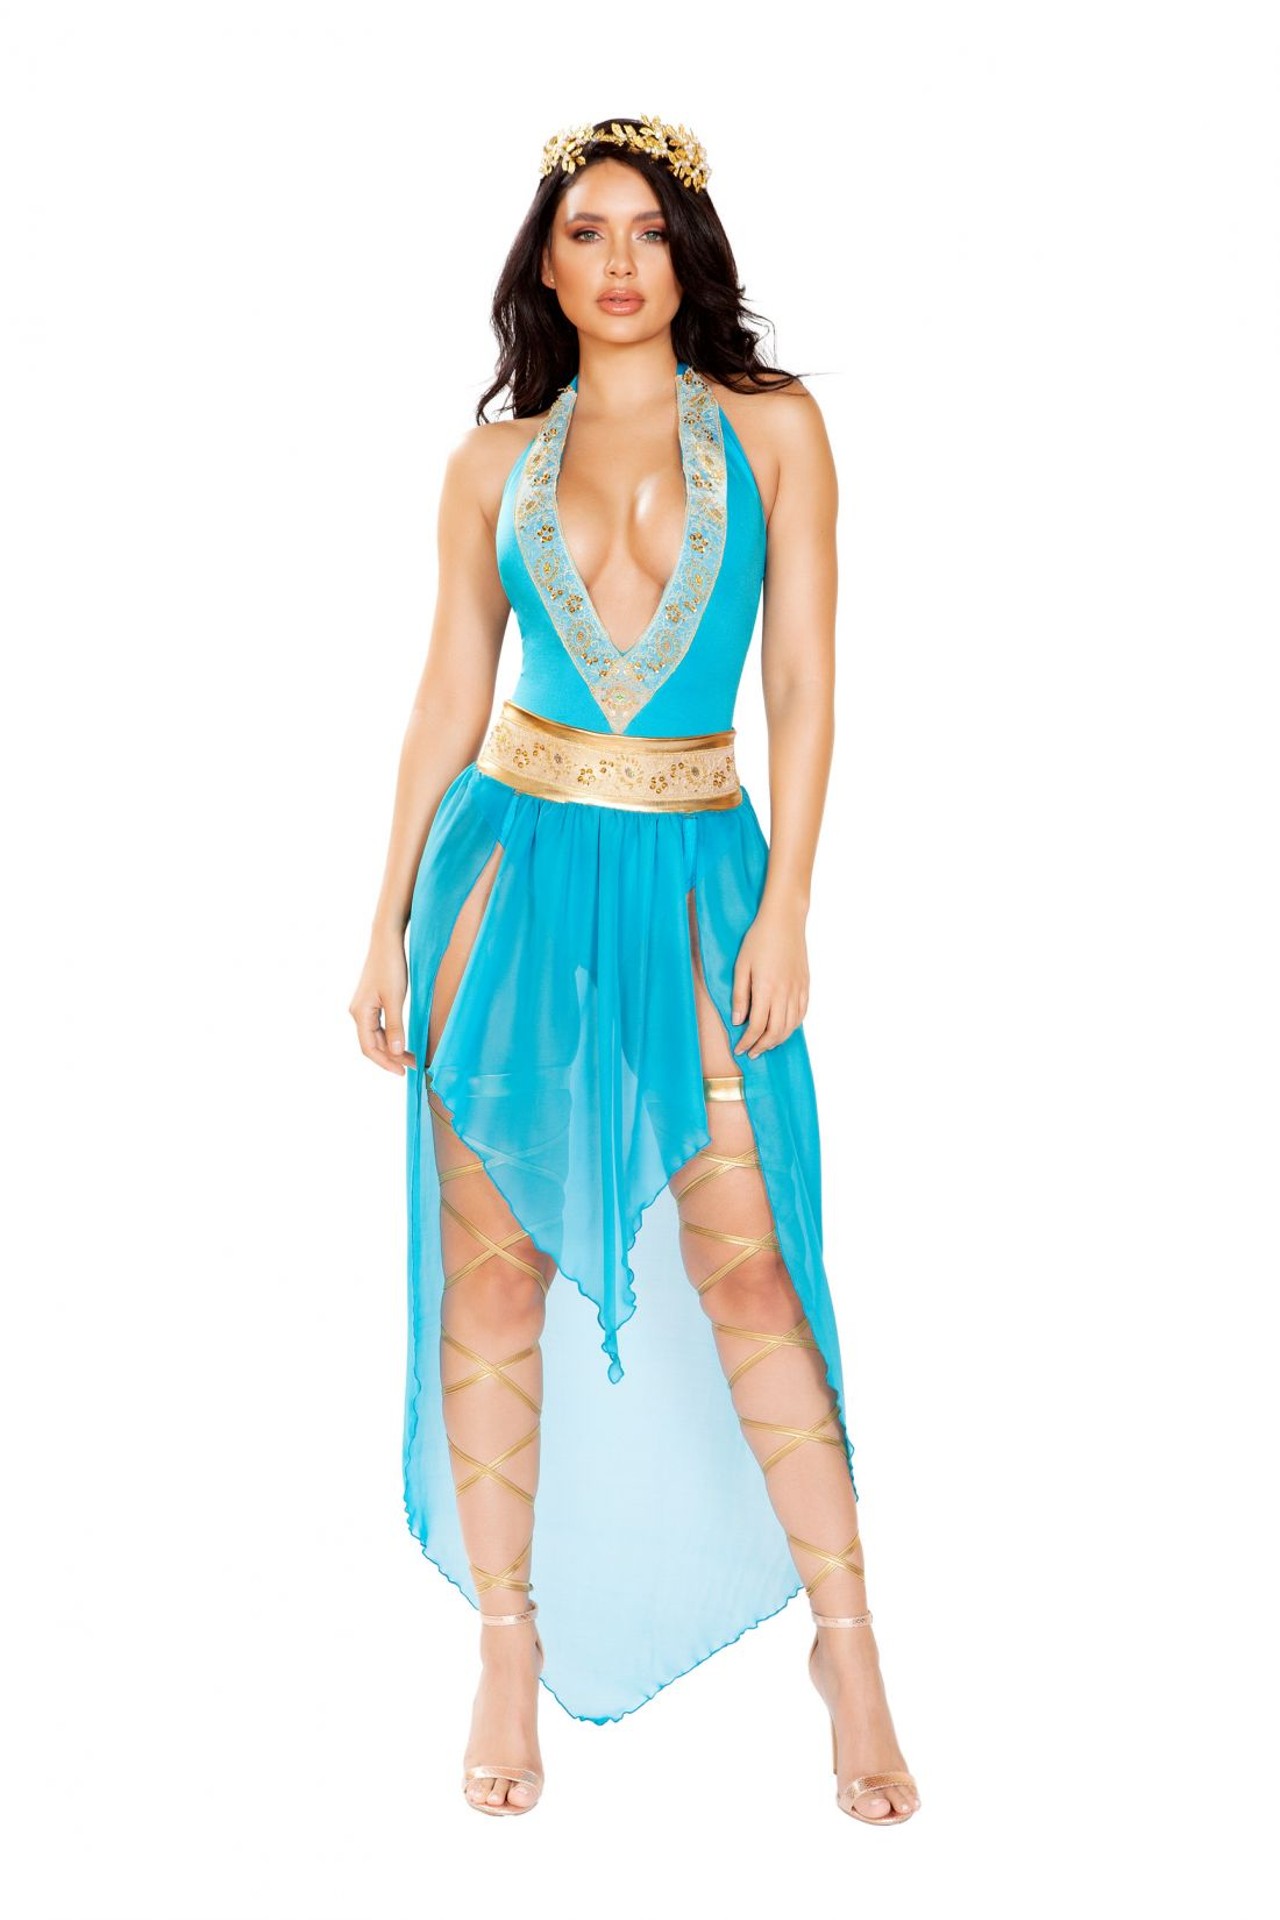 Athena Goddess - 2-Piece Costume; $75